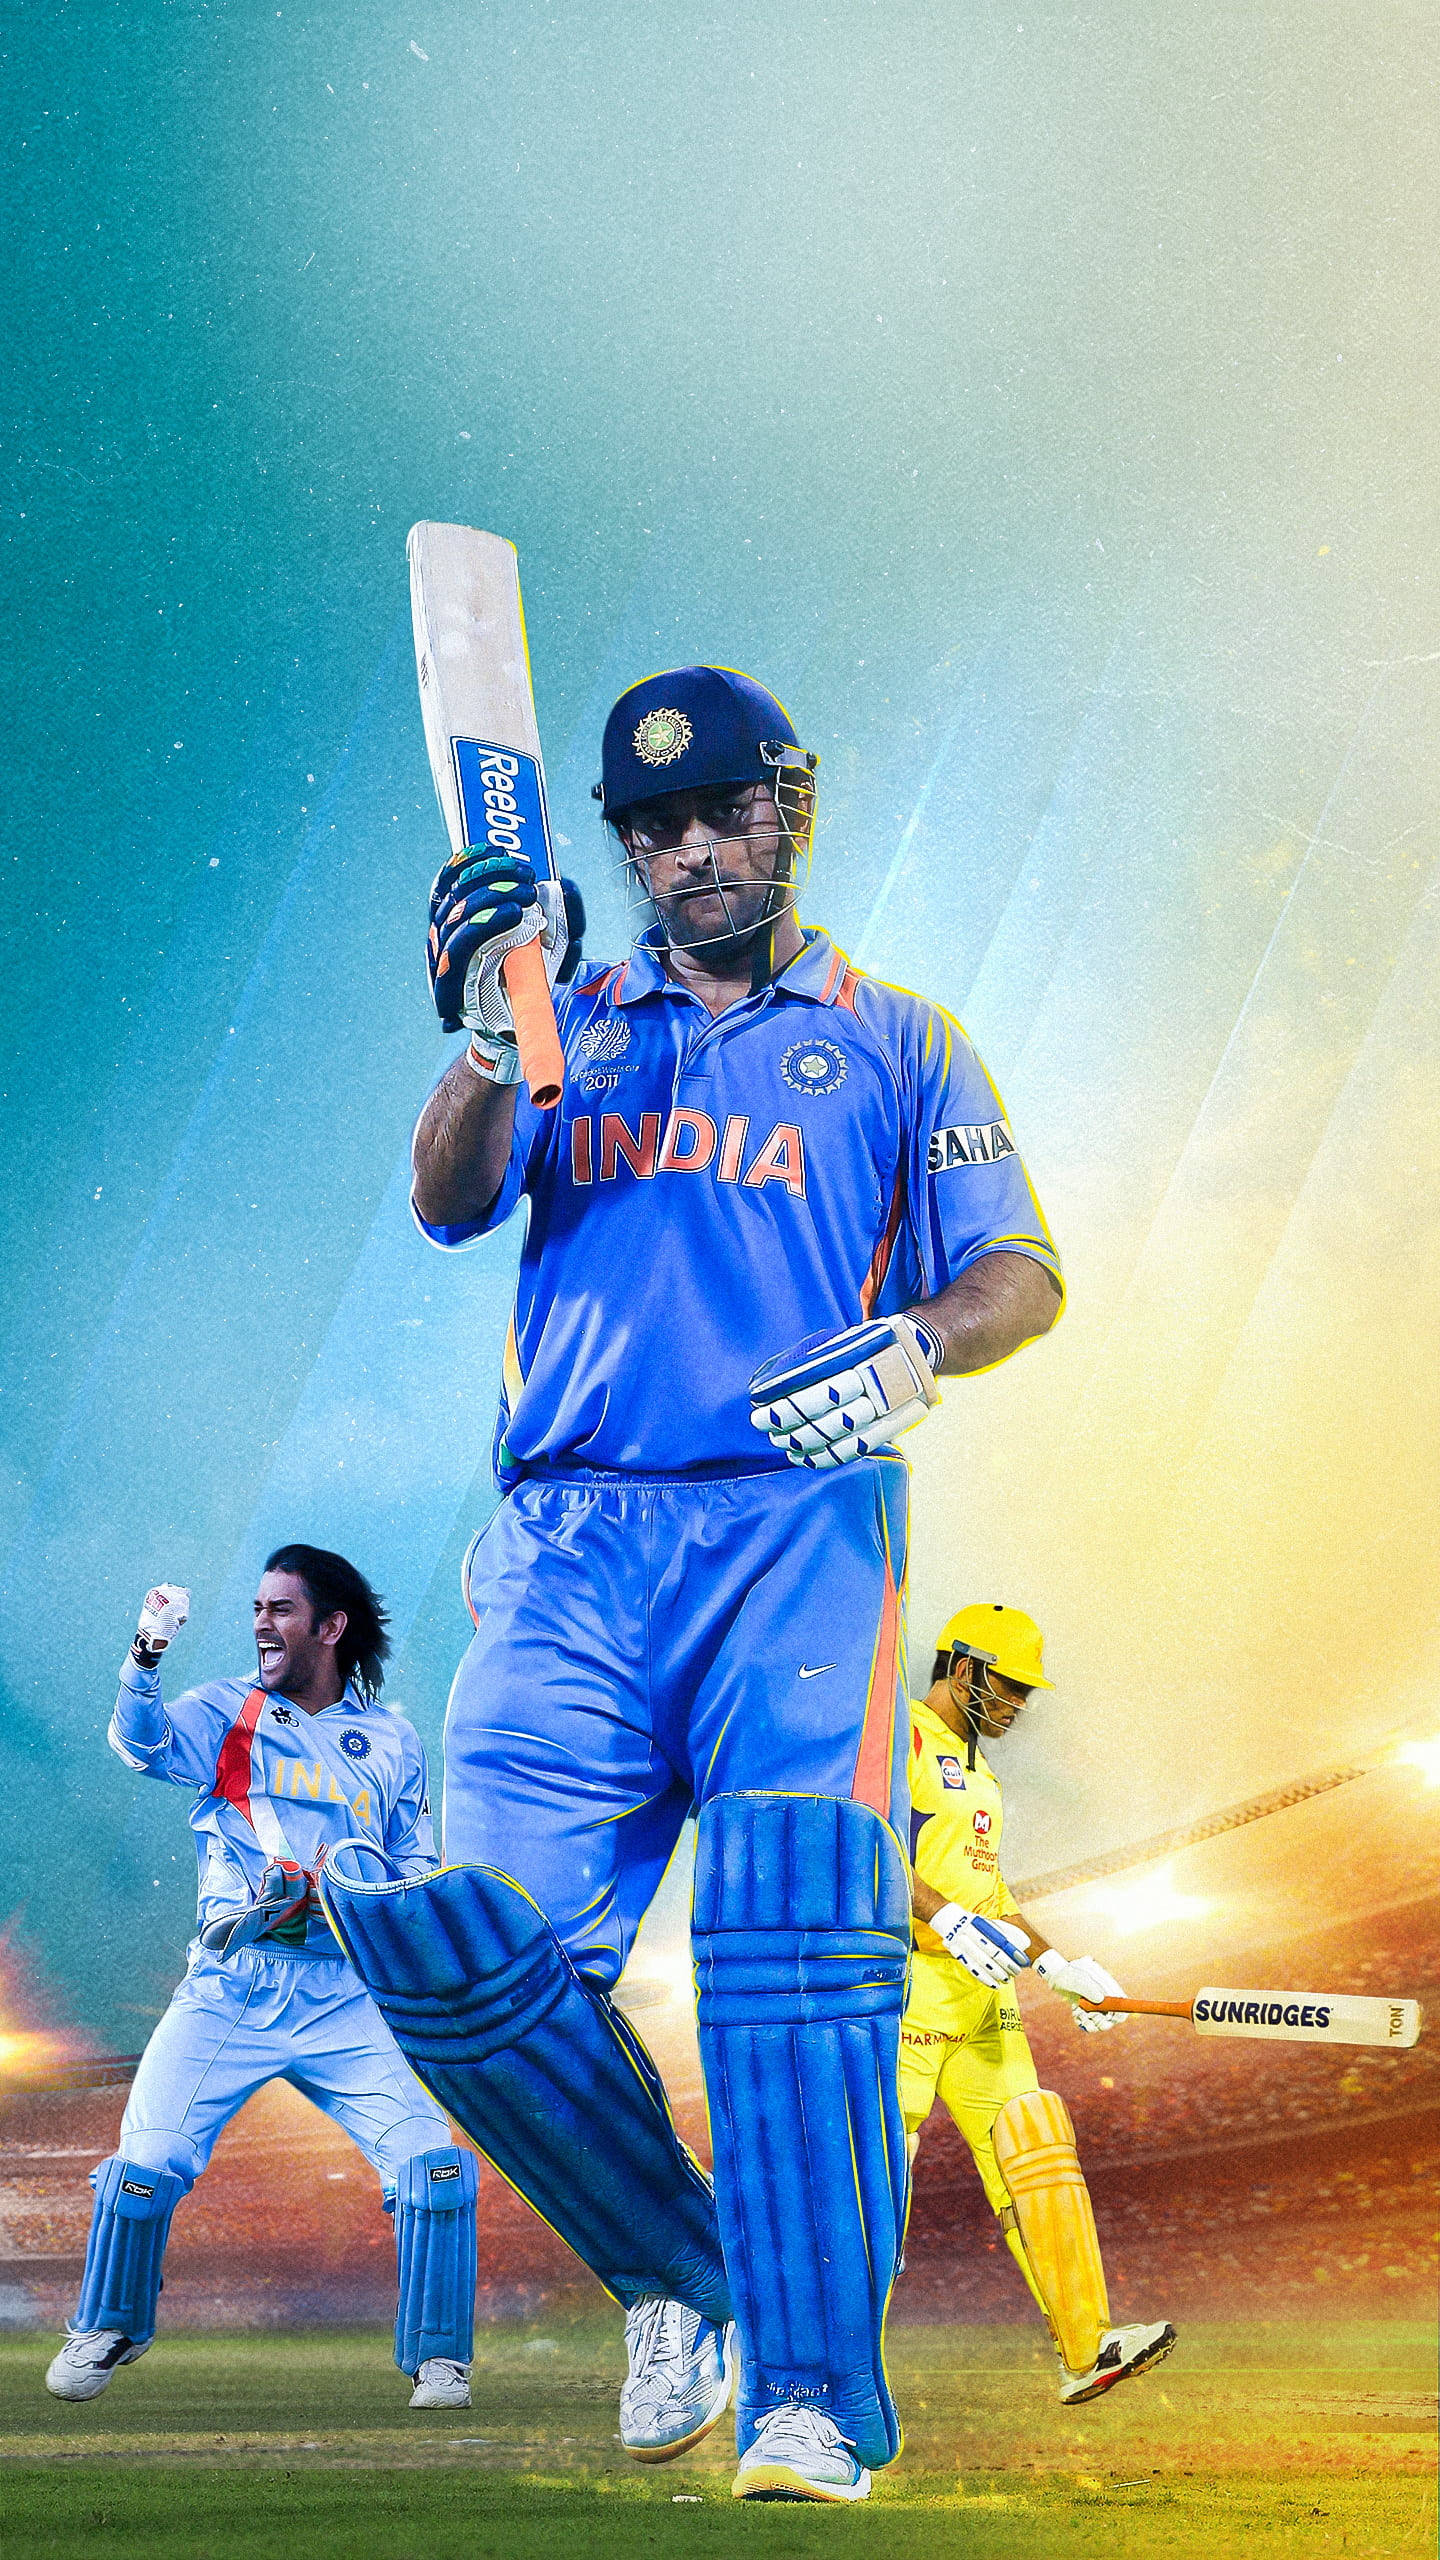 Free Indian Cricket Wallpaper Downloads, [200+] Indian Cricket Wallpapers  for FREE 